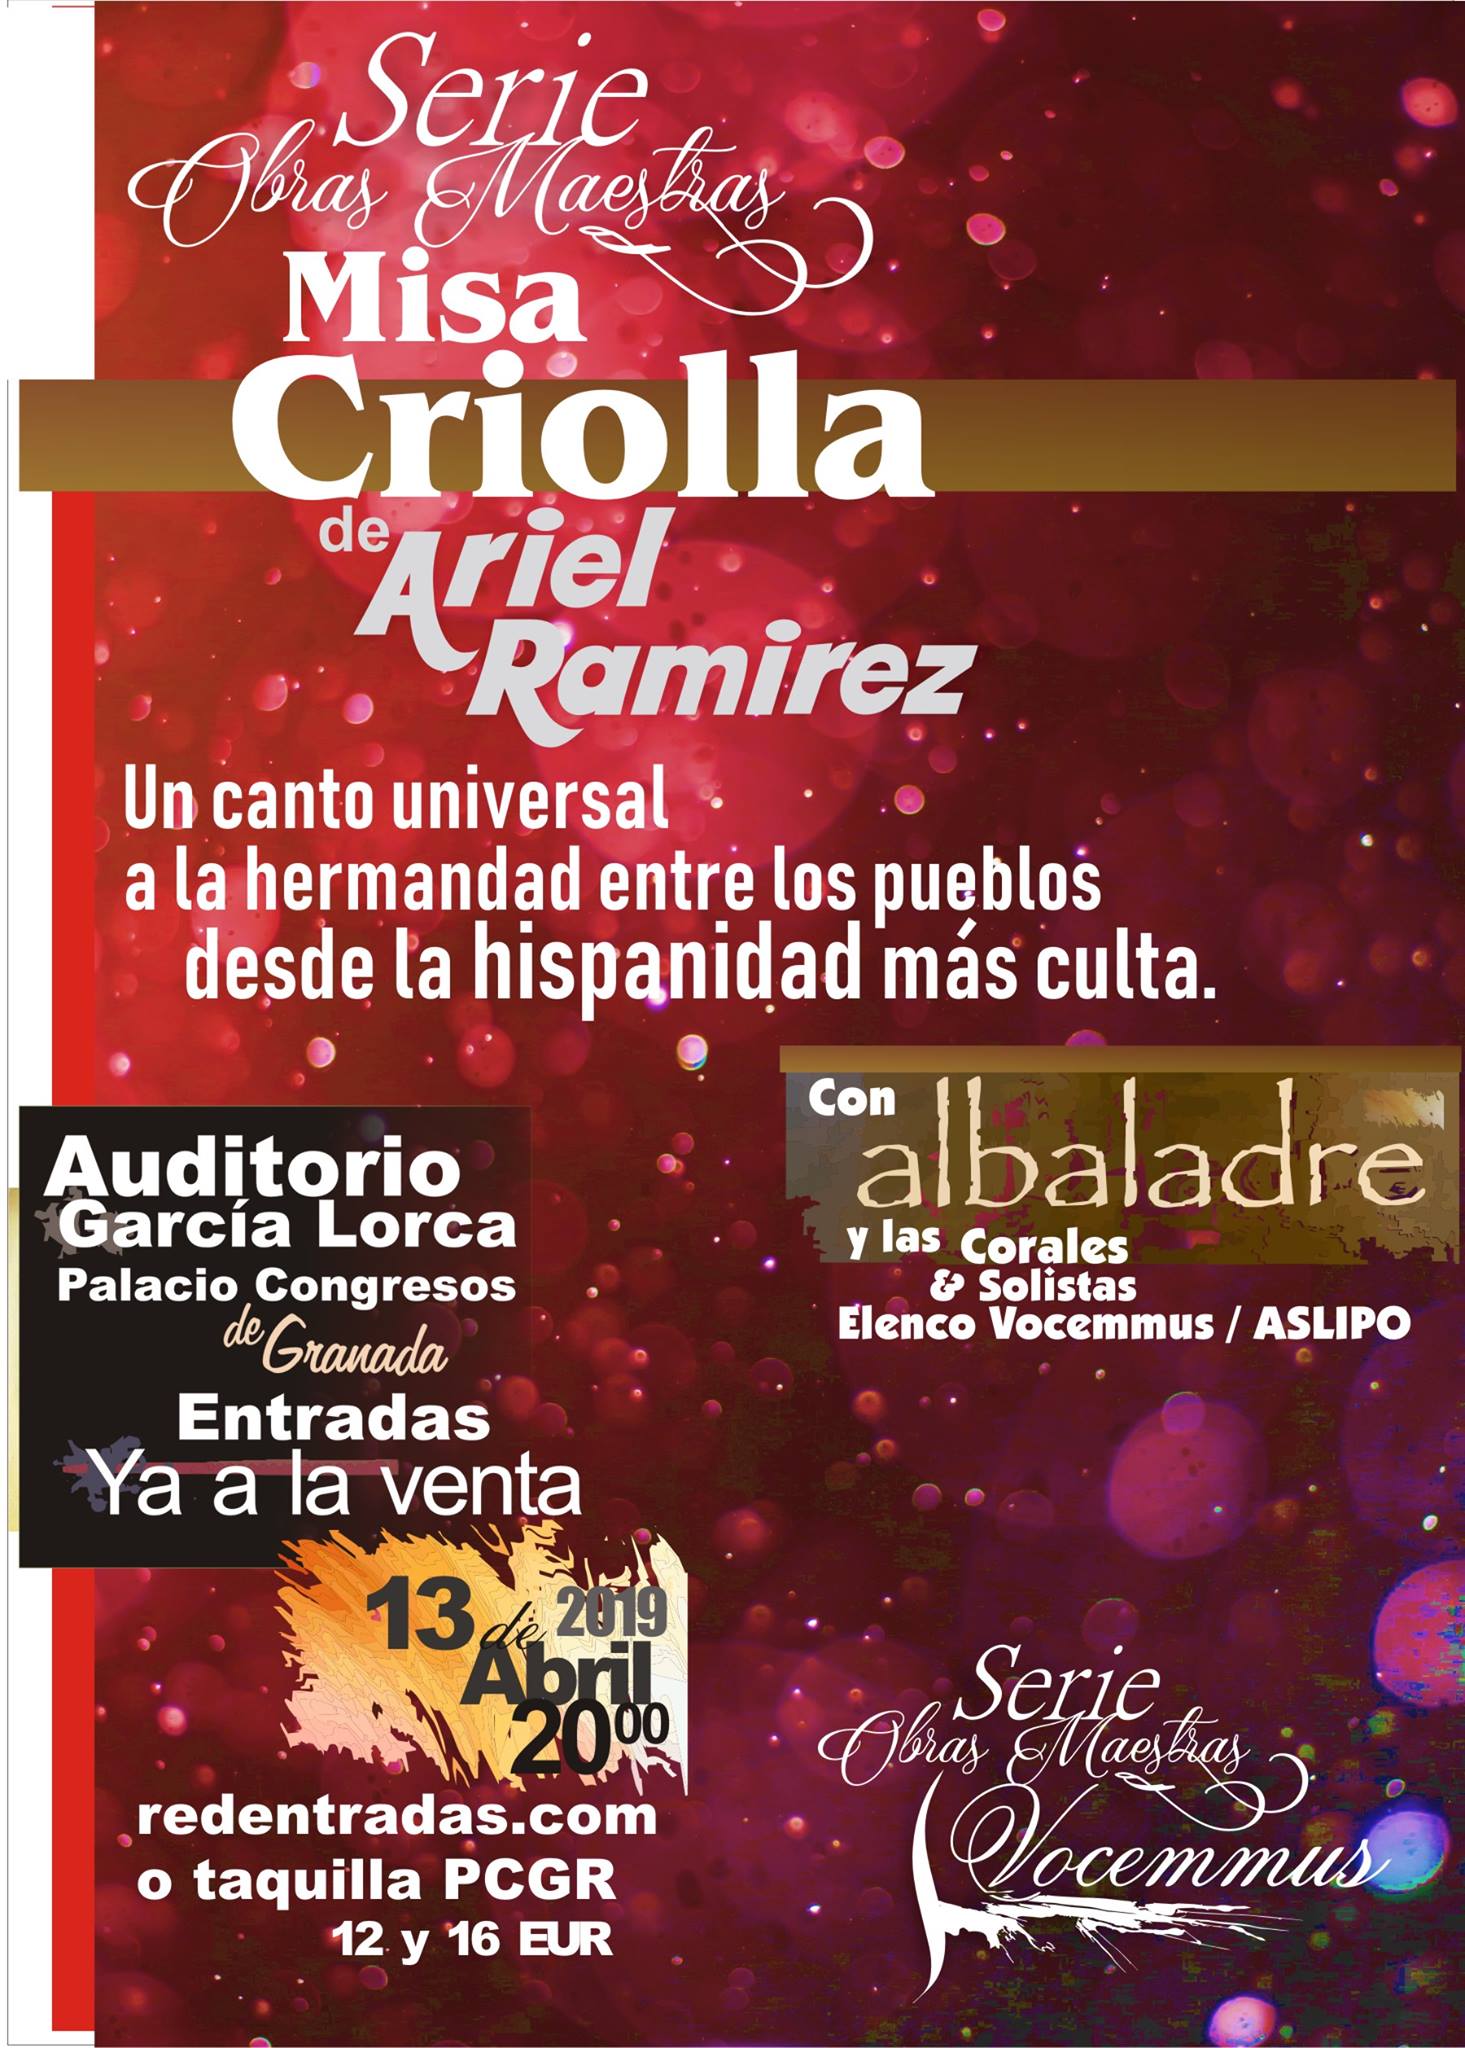 Misa Criolla de Ariel Ramírez llega en abril a Granada